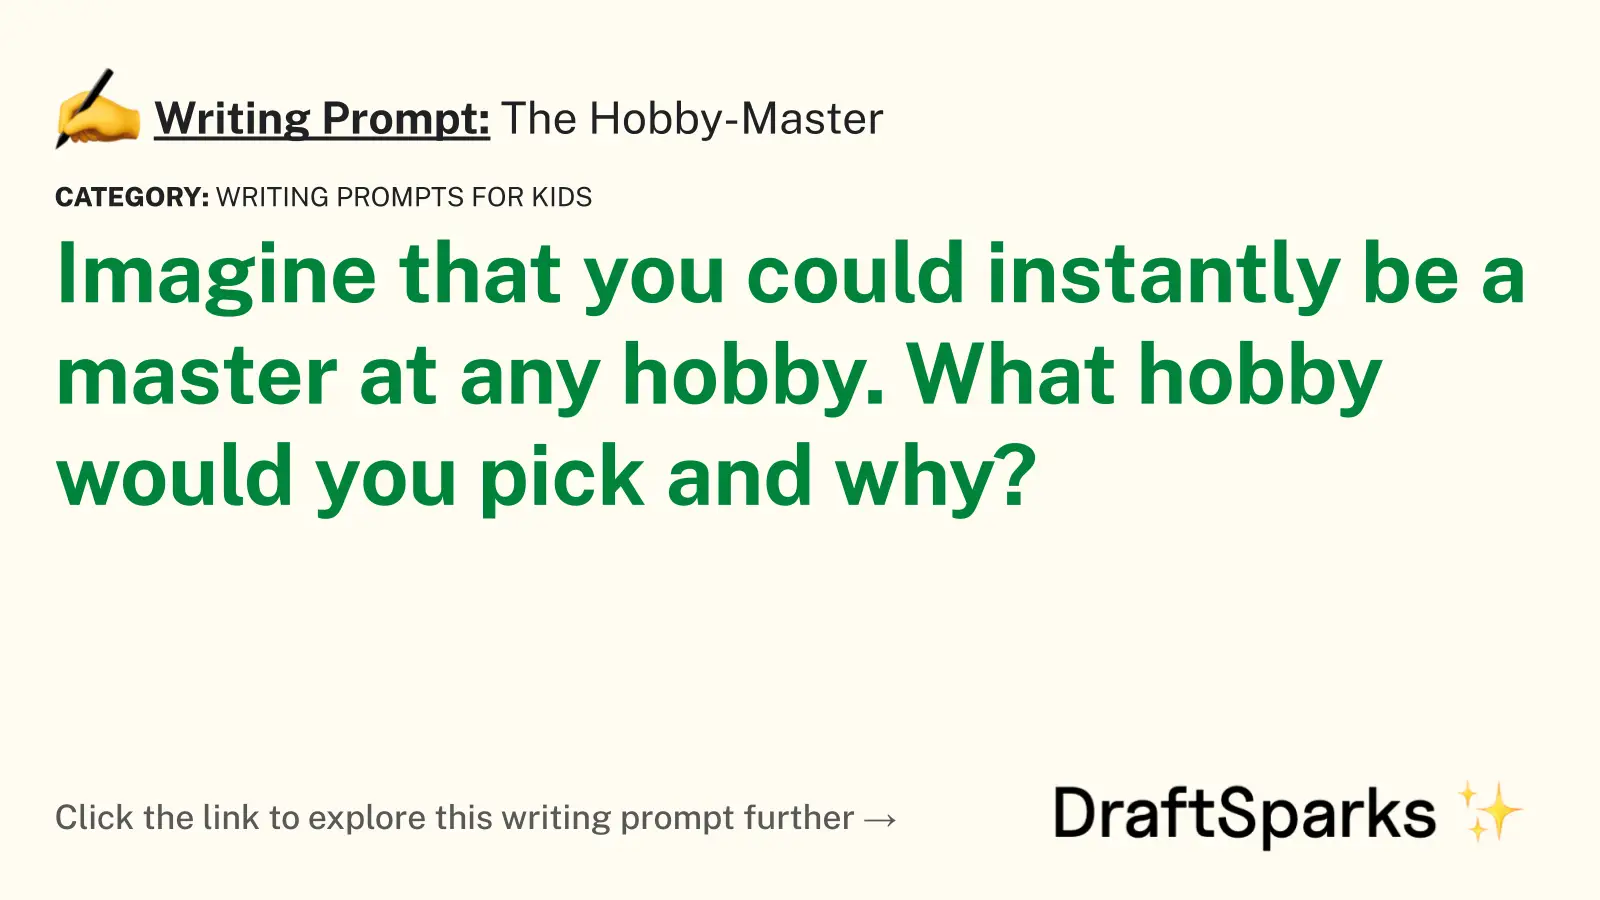 The Hobby-Master